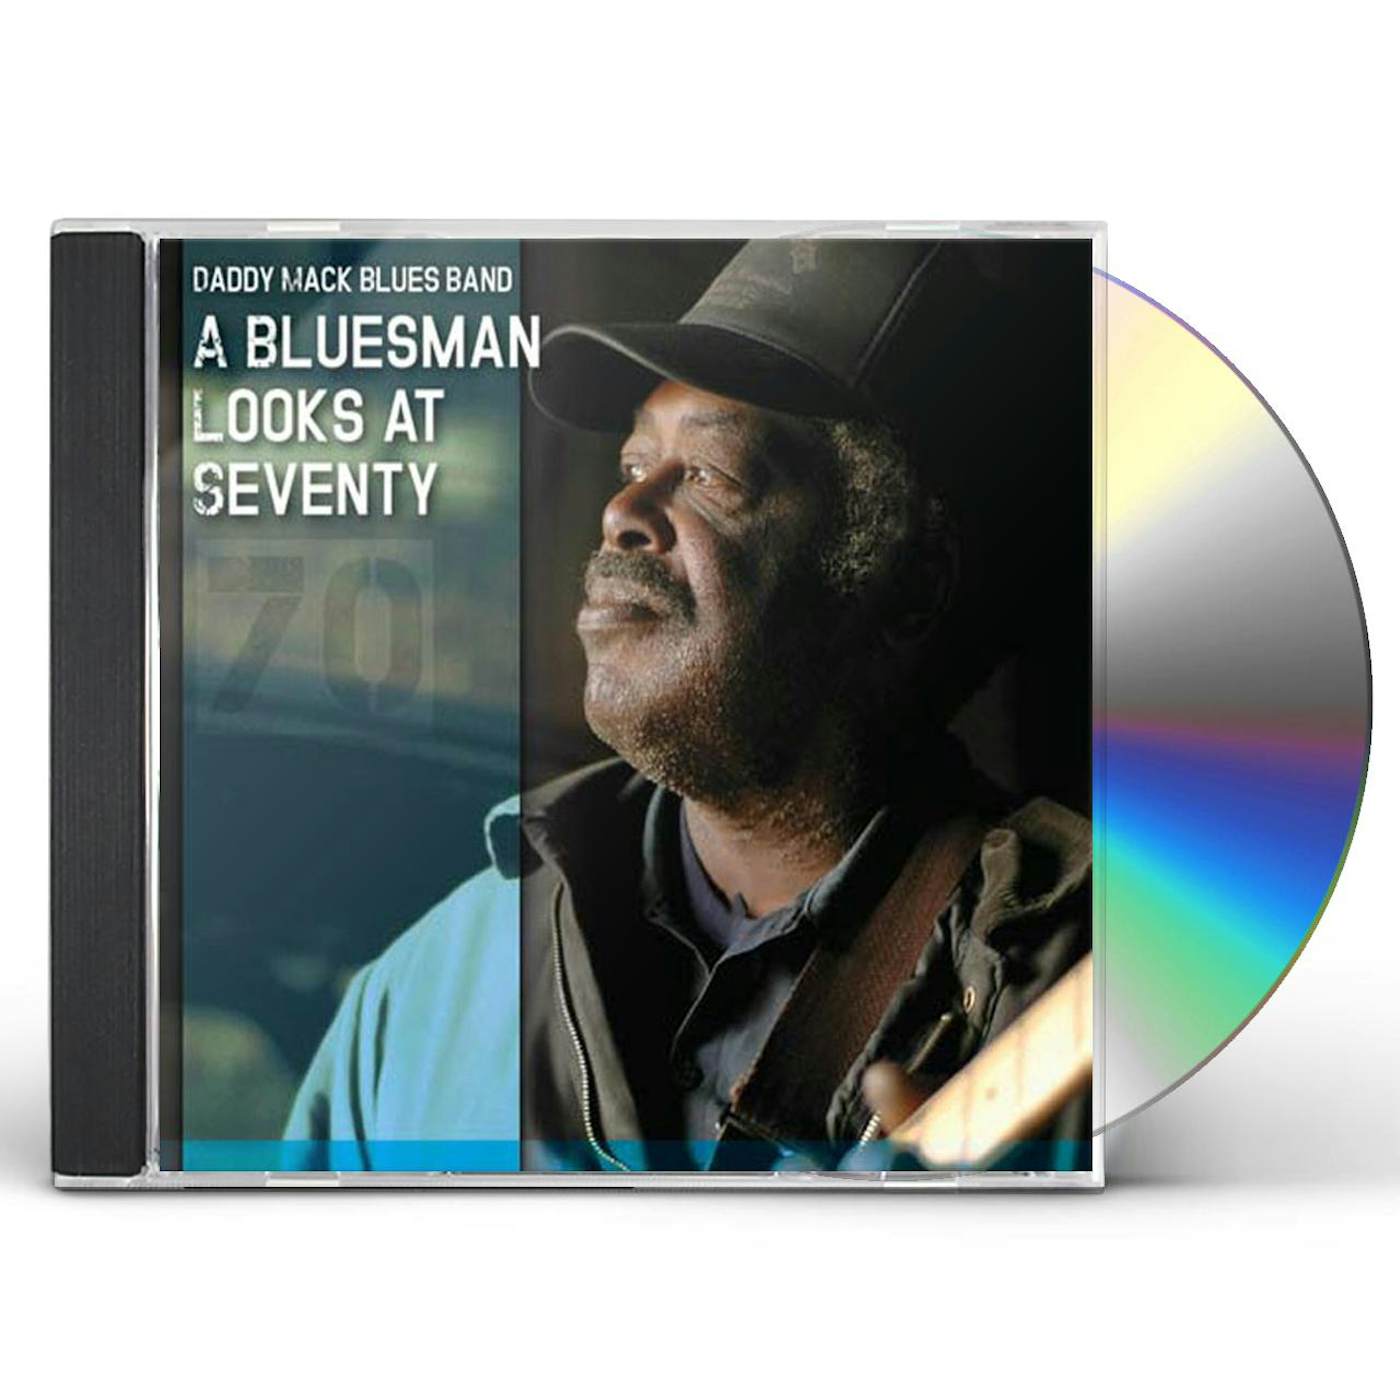 Daddy Mack Blues Band BLUESMAN LOOKS AT SEVENTY CD